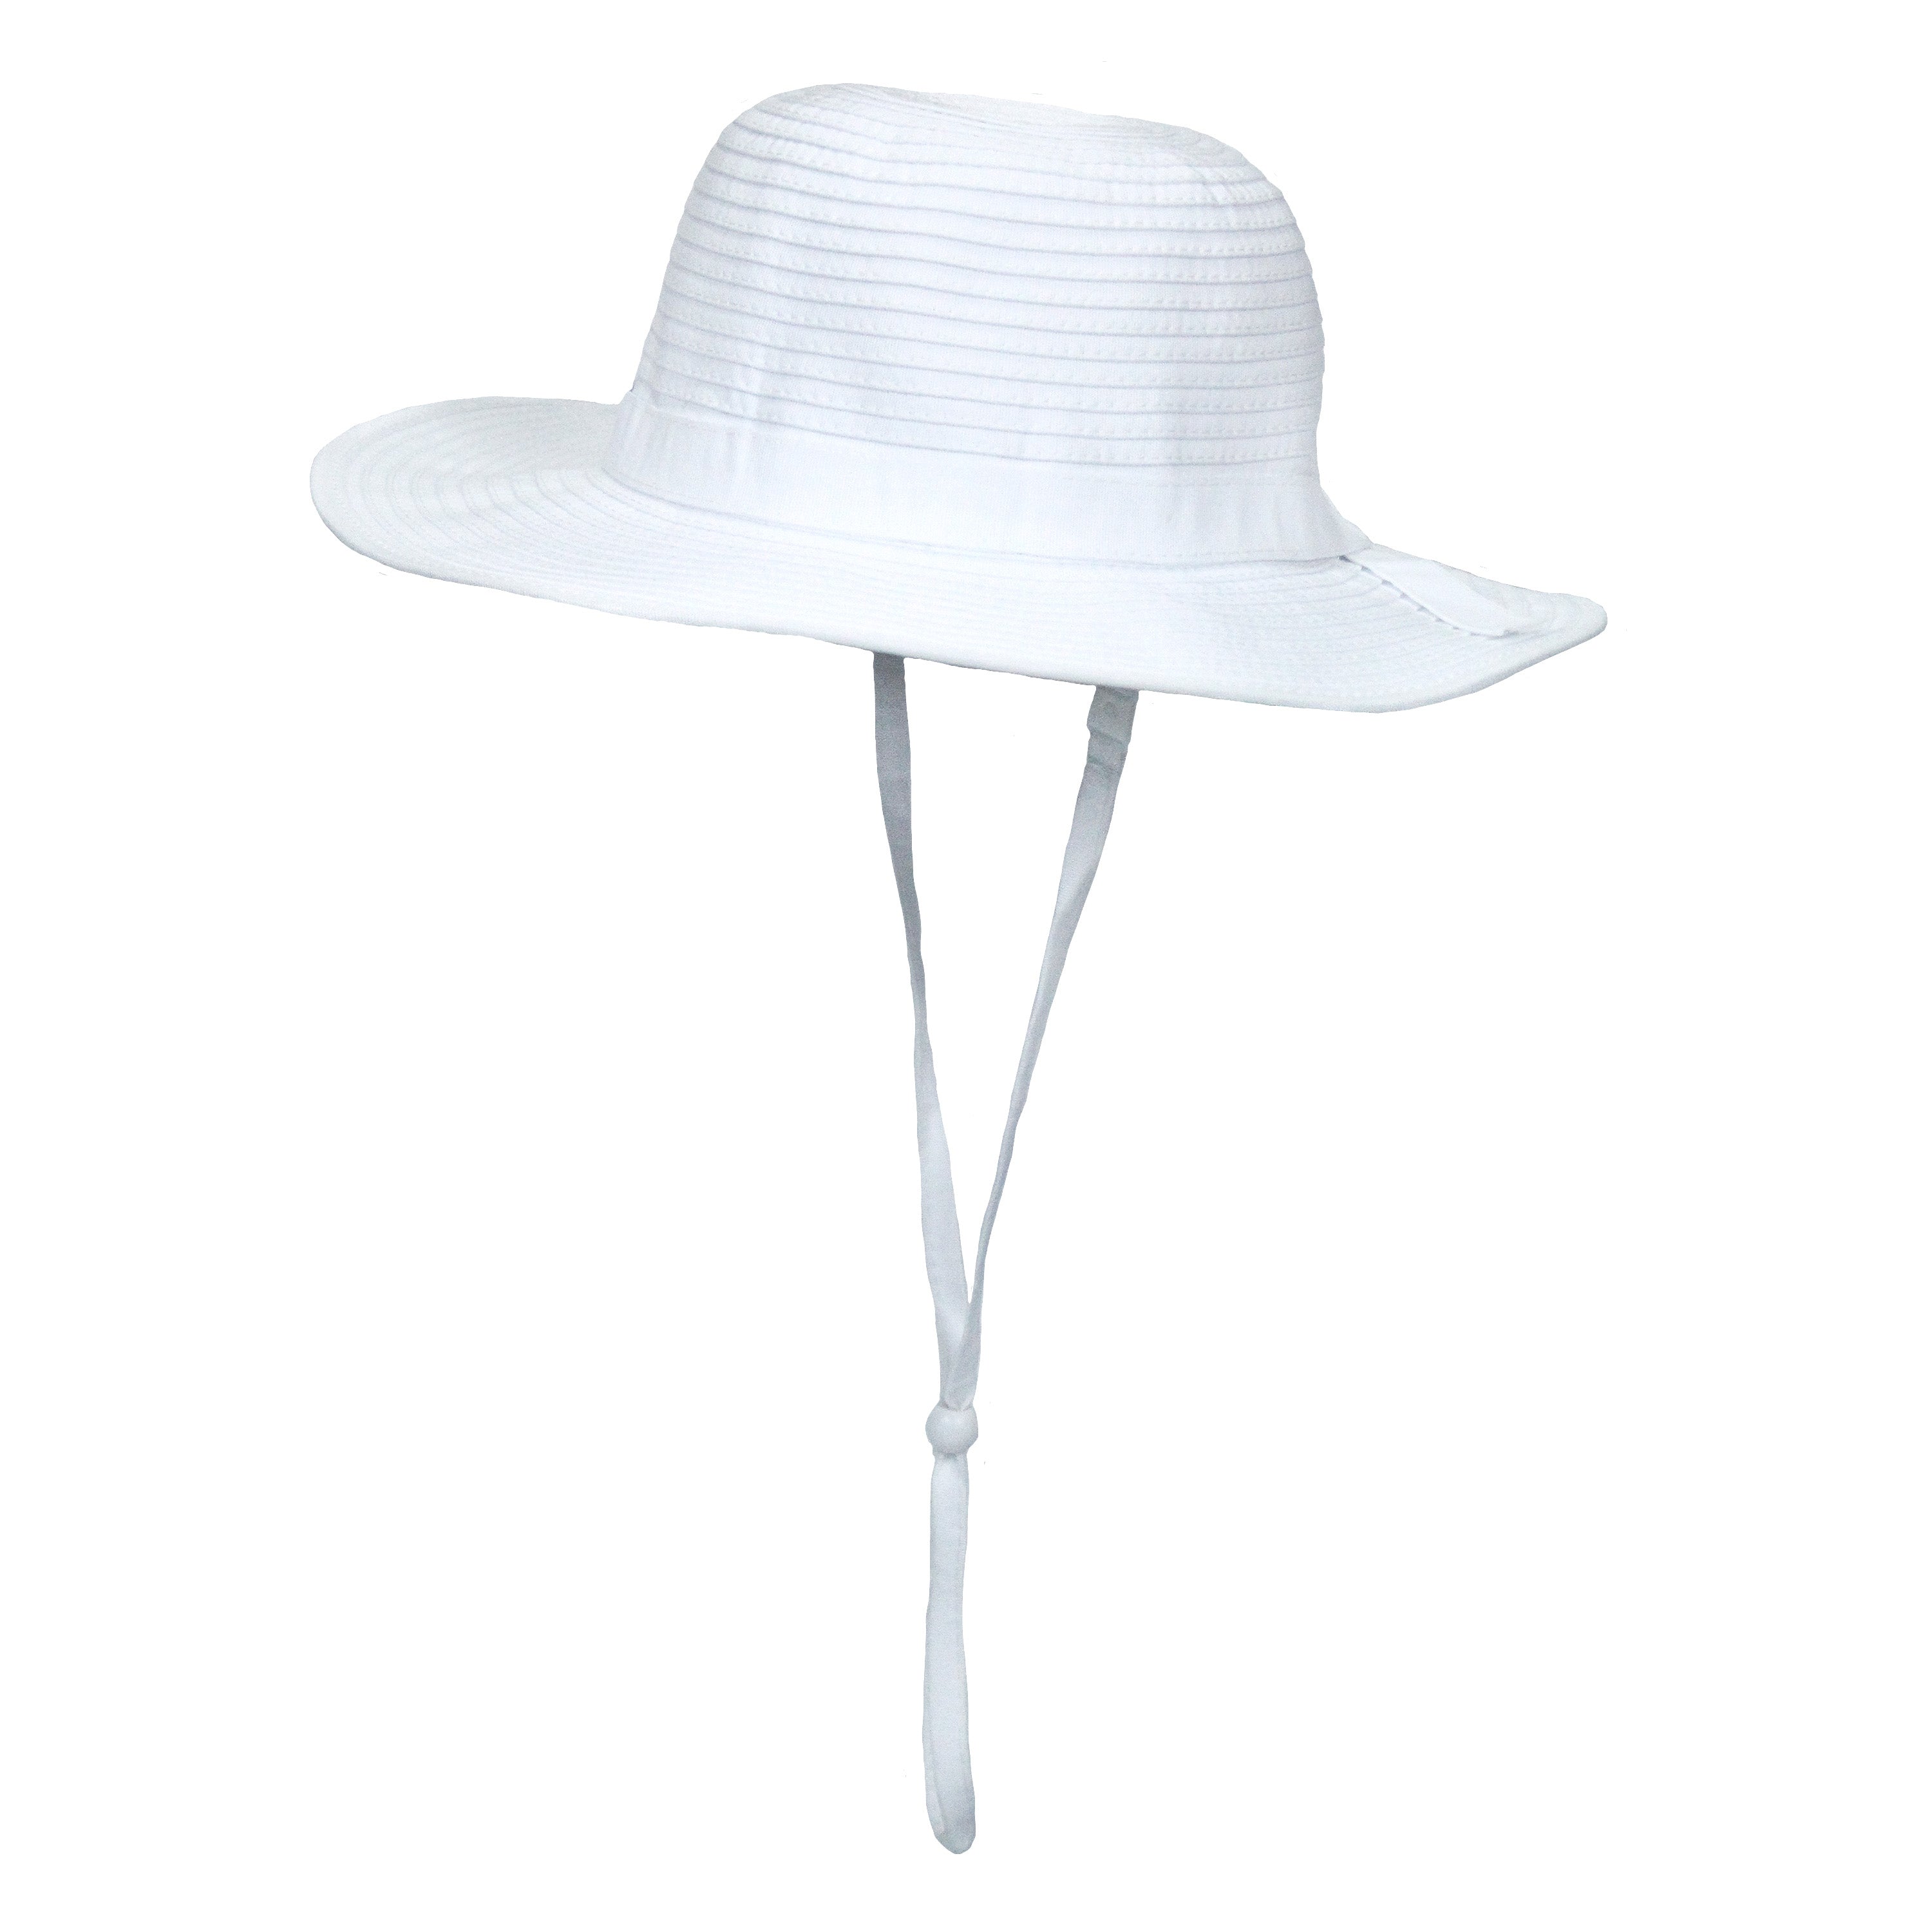 SwimZip Girls' Wide Brim Sun Hat - UPF 50+ Sun Protection